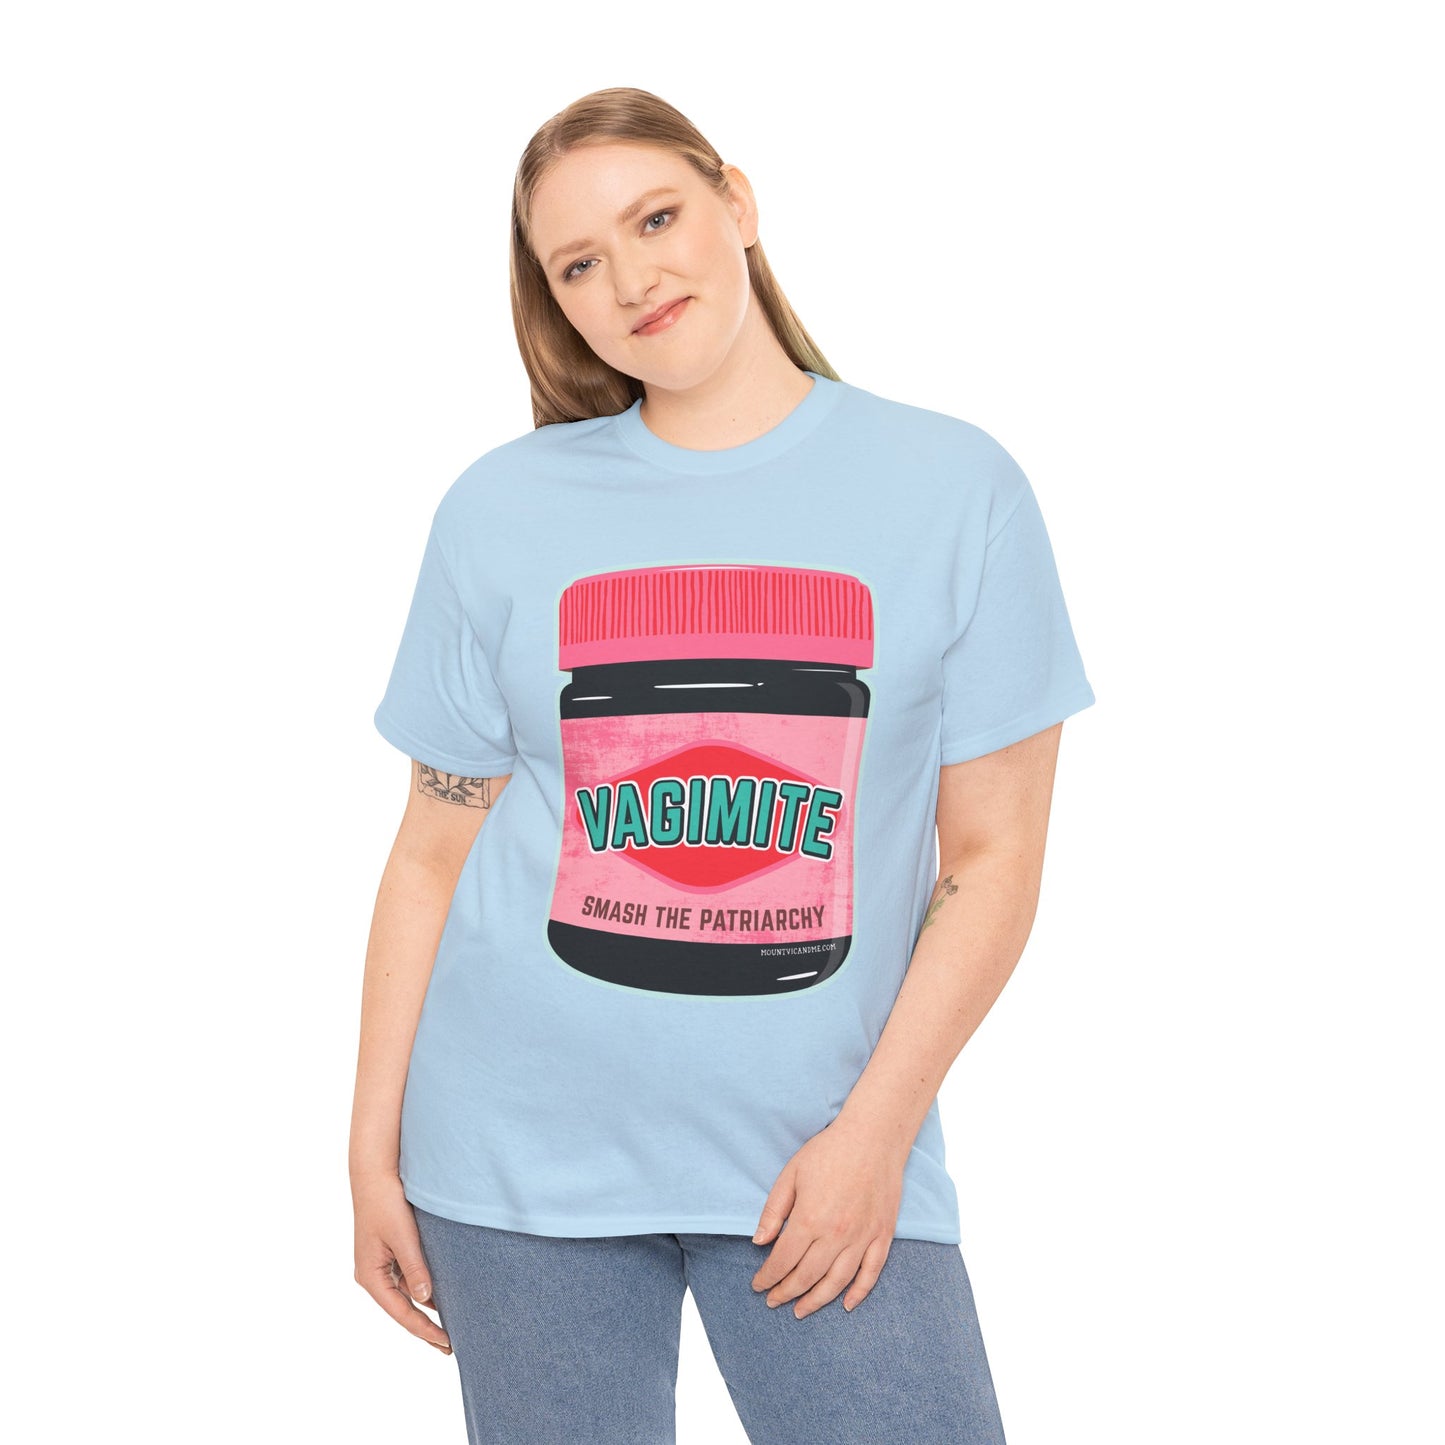 Vagimite feminist classic cotton t shirt